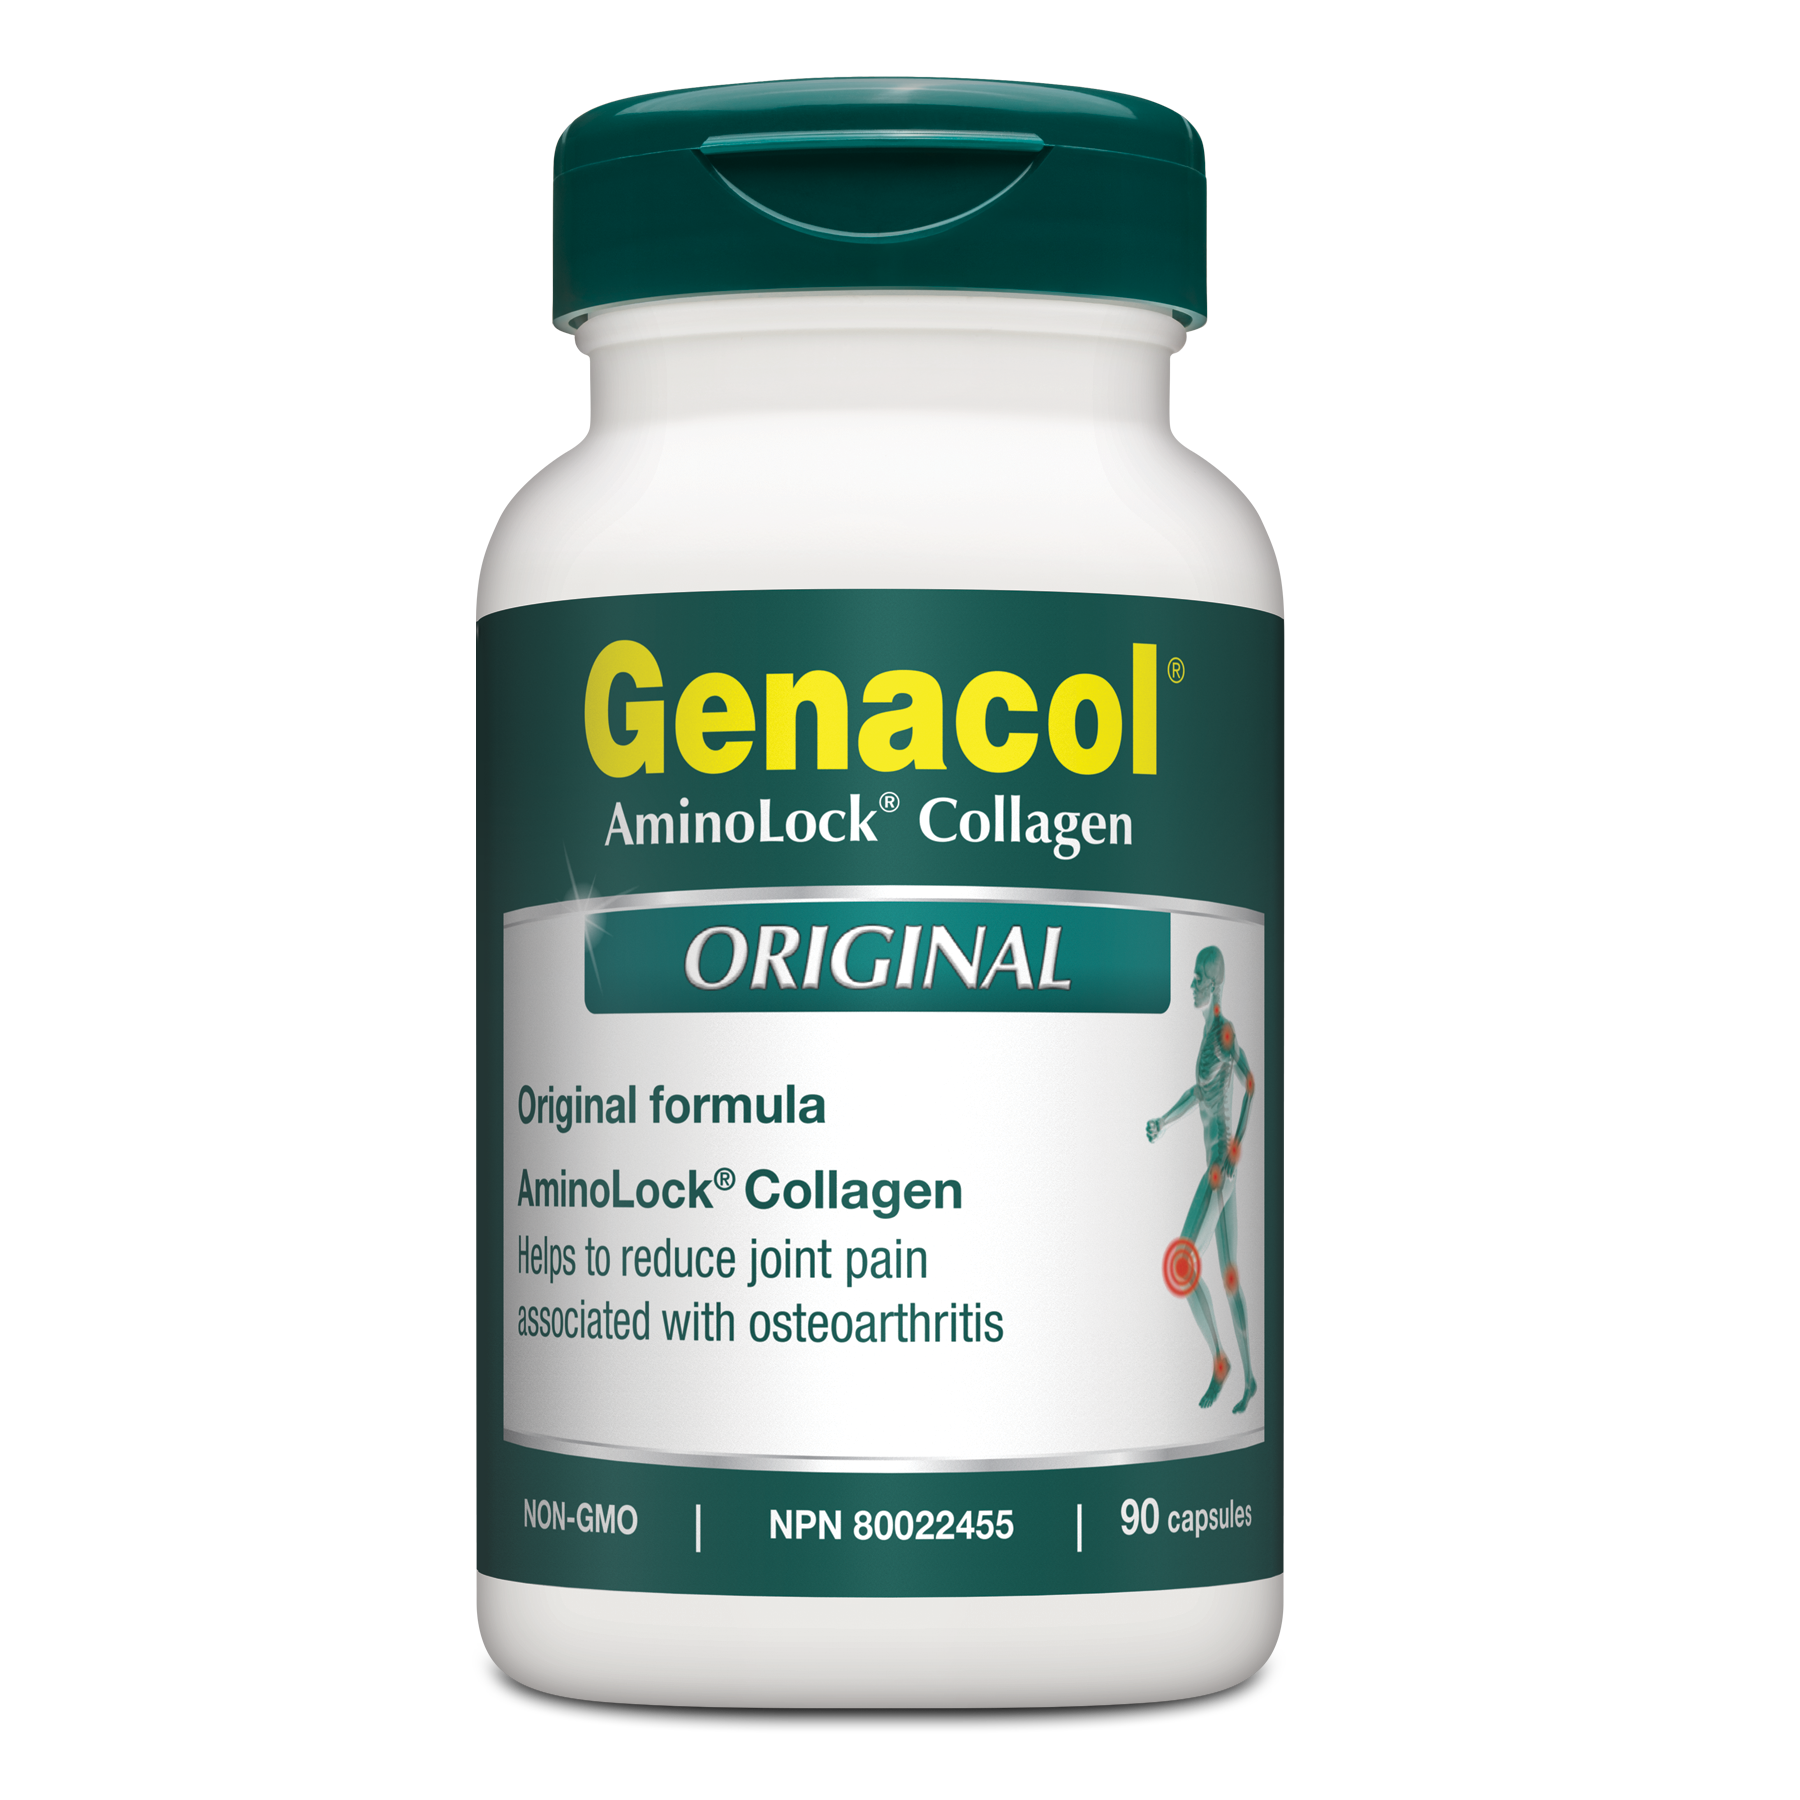 Thực phẩm bảo vệ sức khỏe Genacol Original genacol formule originale 90caps 828875002000 en